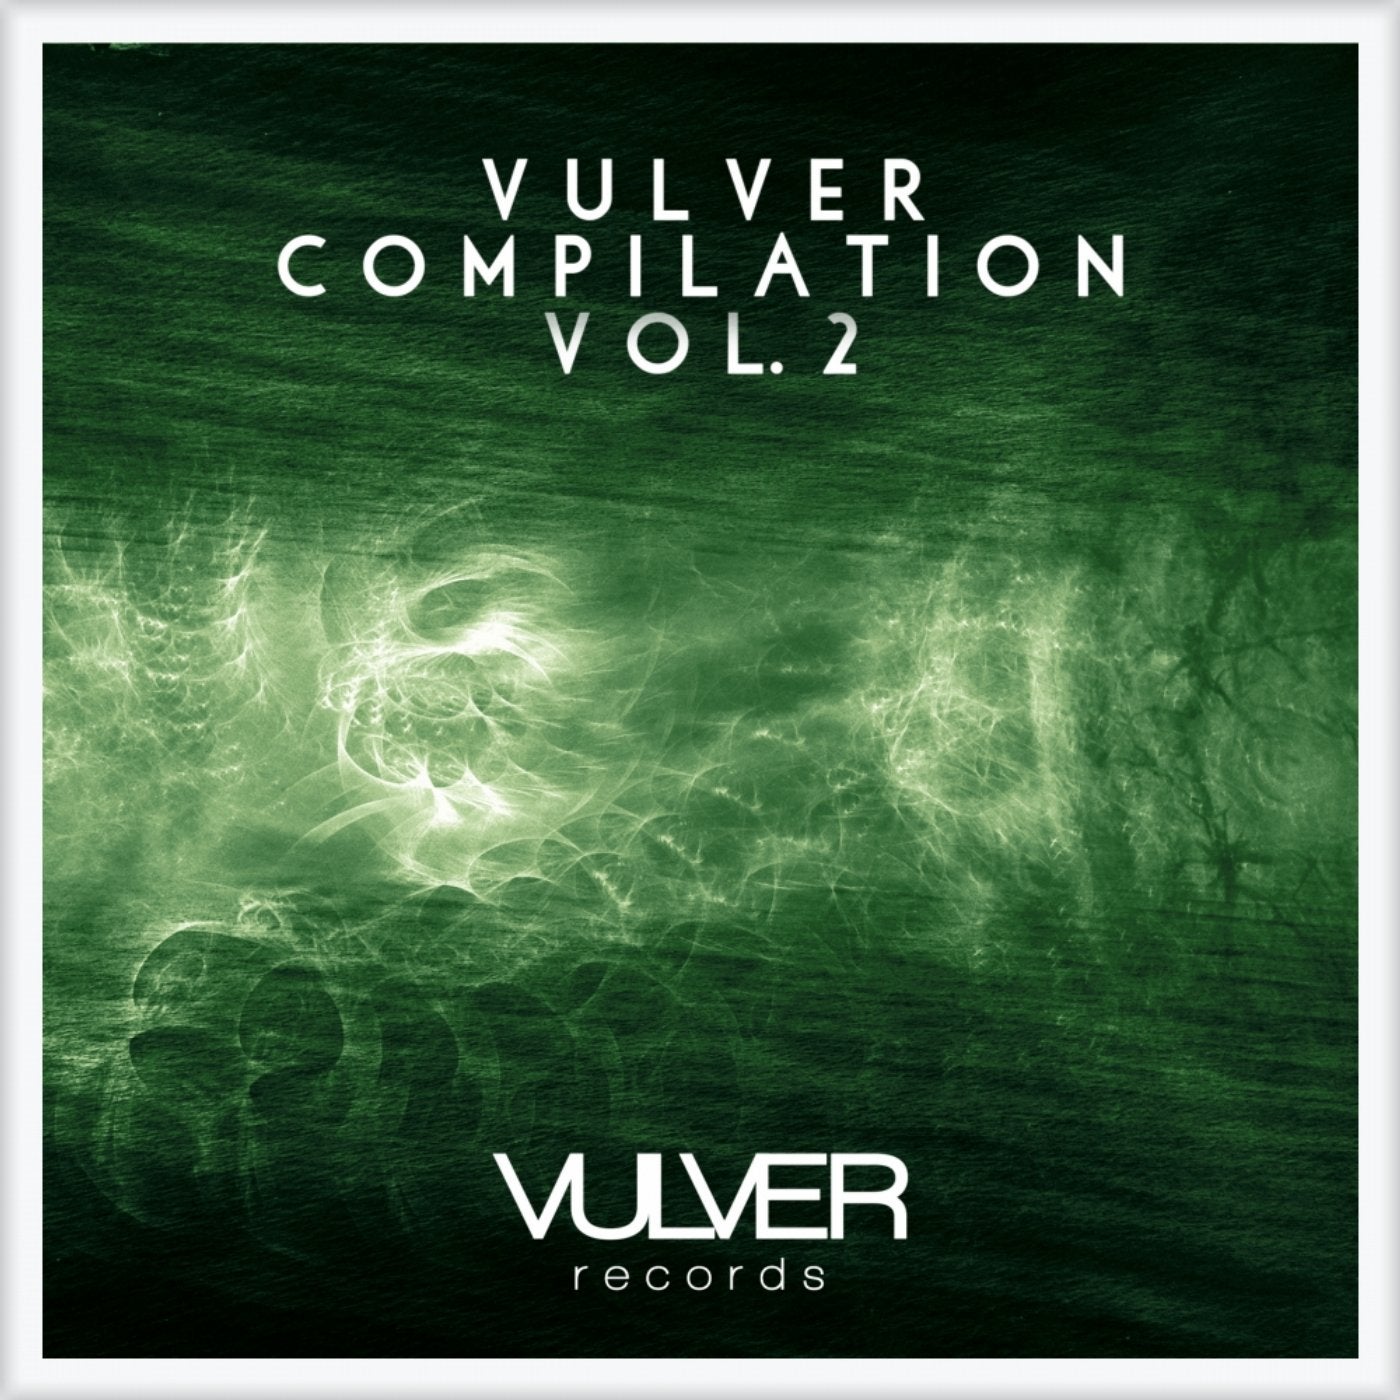 Vulver Compilation, Vol. 2